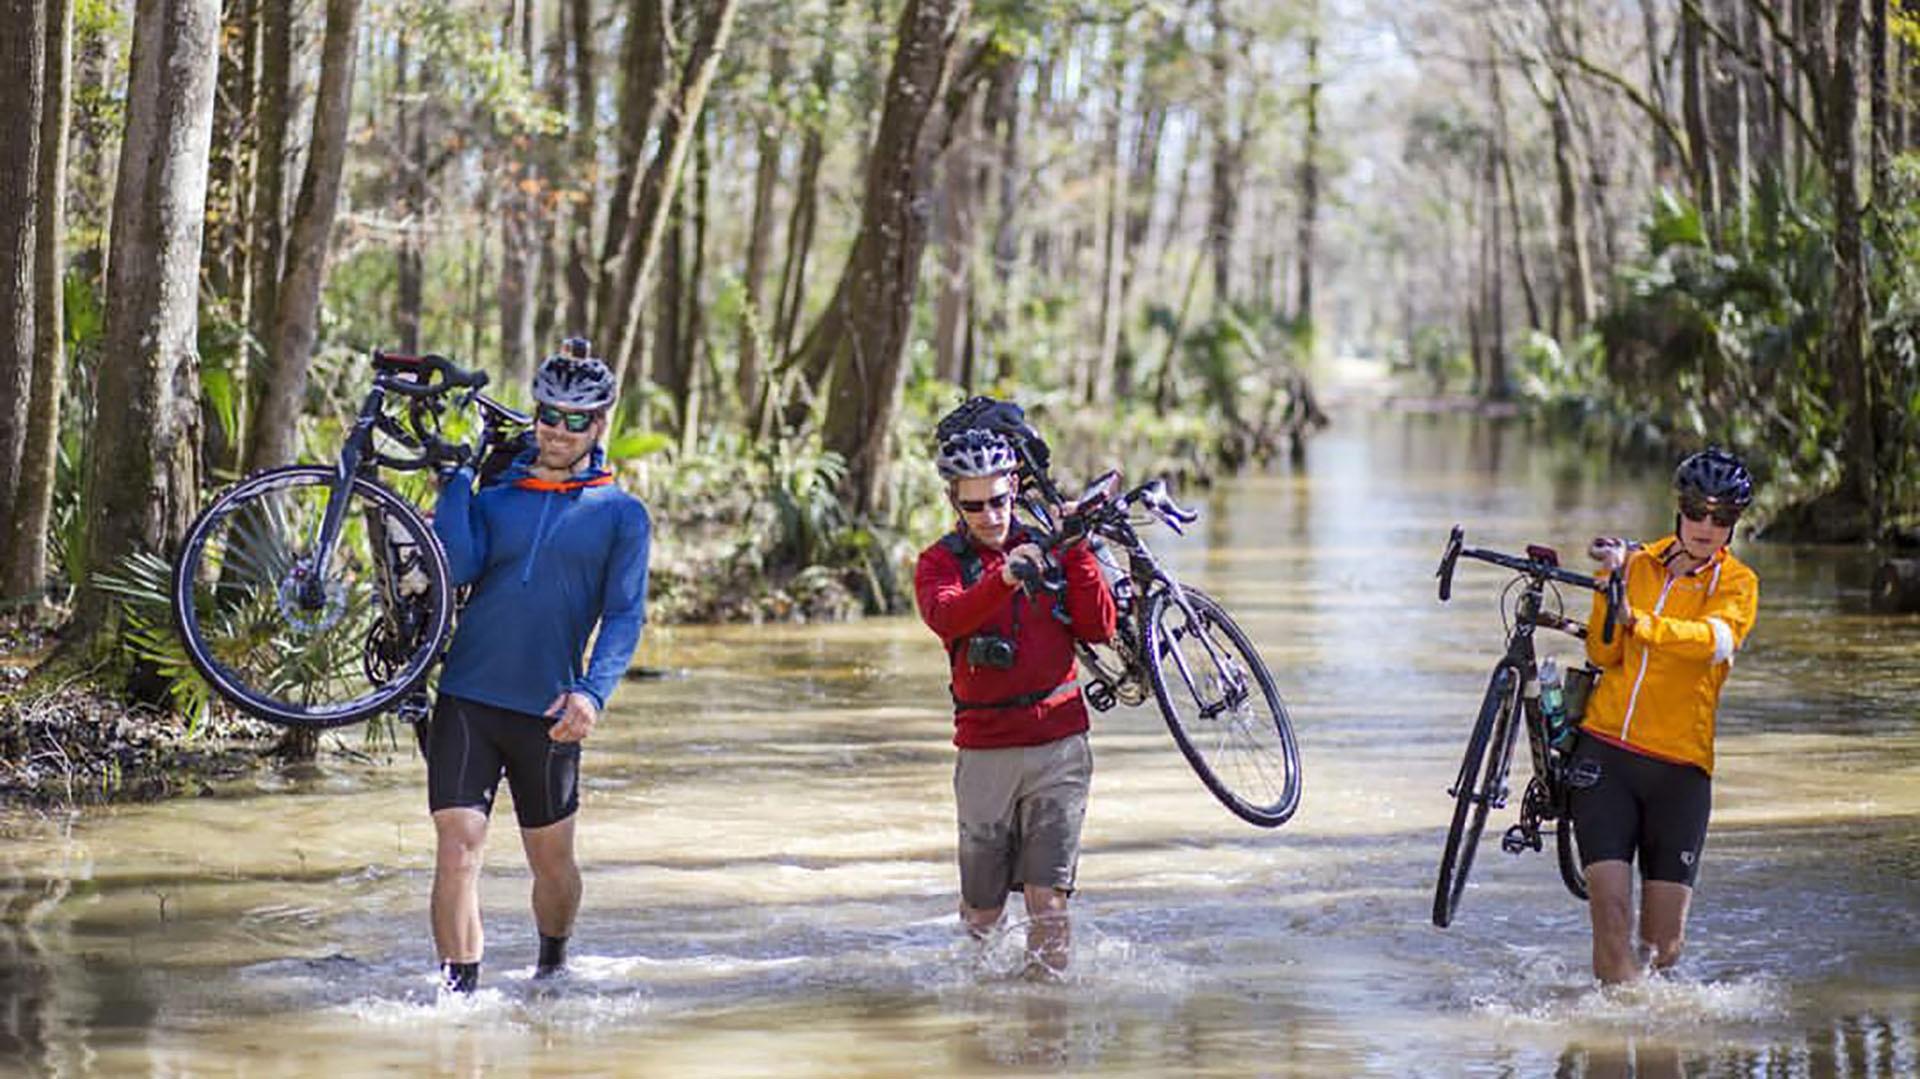 Joe Guthrie, Carlton Ward, and Mallory Dimmitt hoist their bikes across a deep crossing.